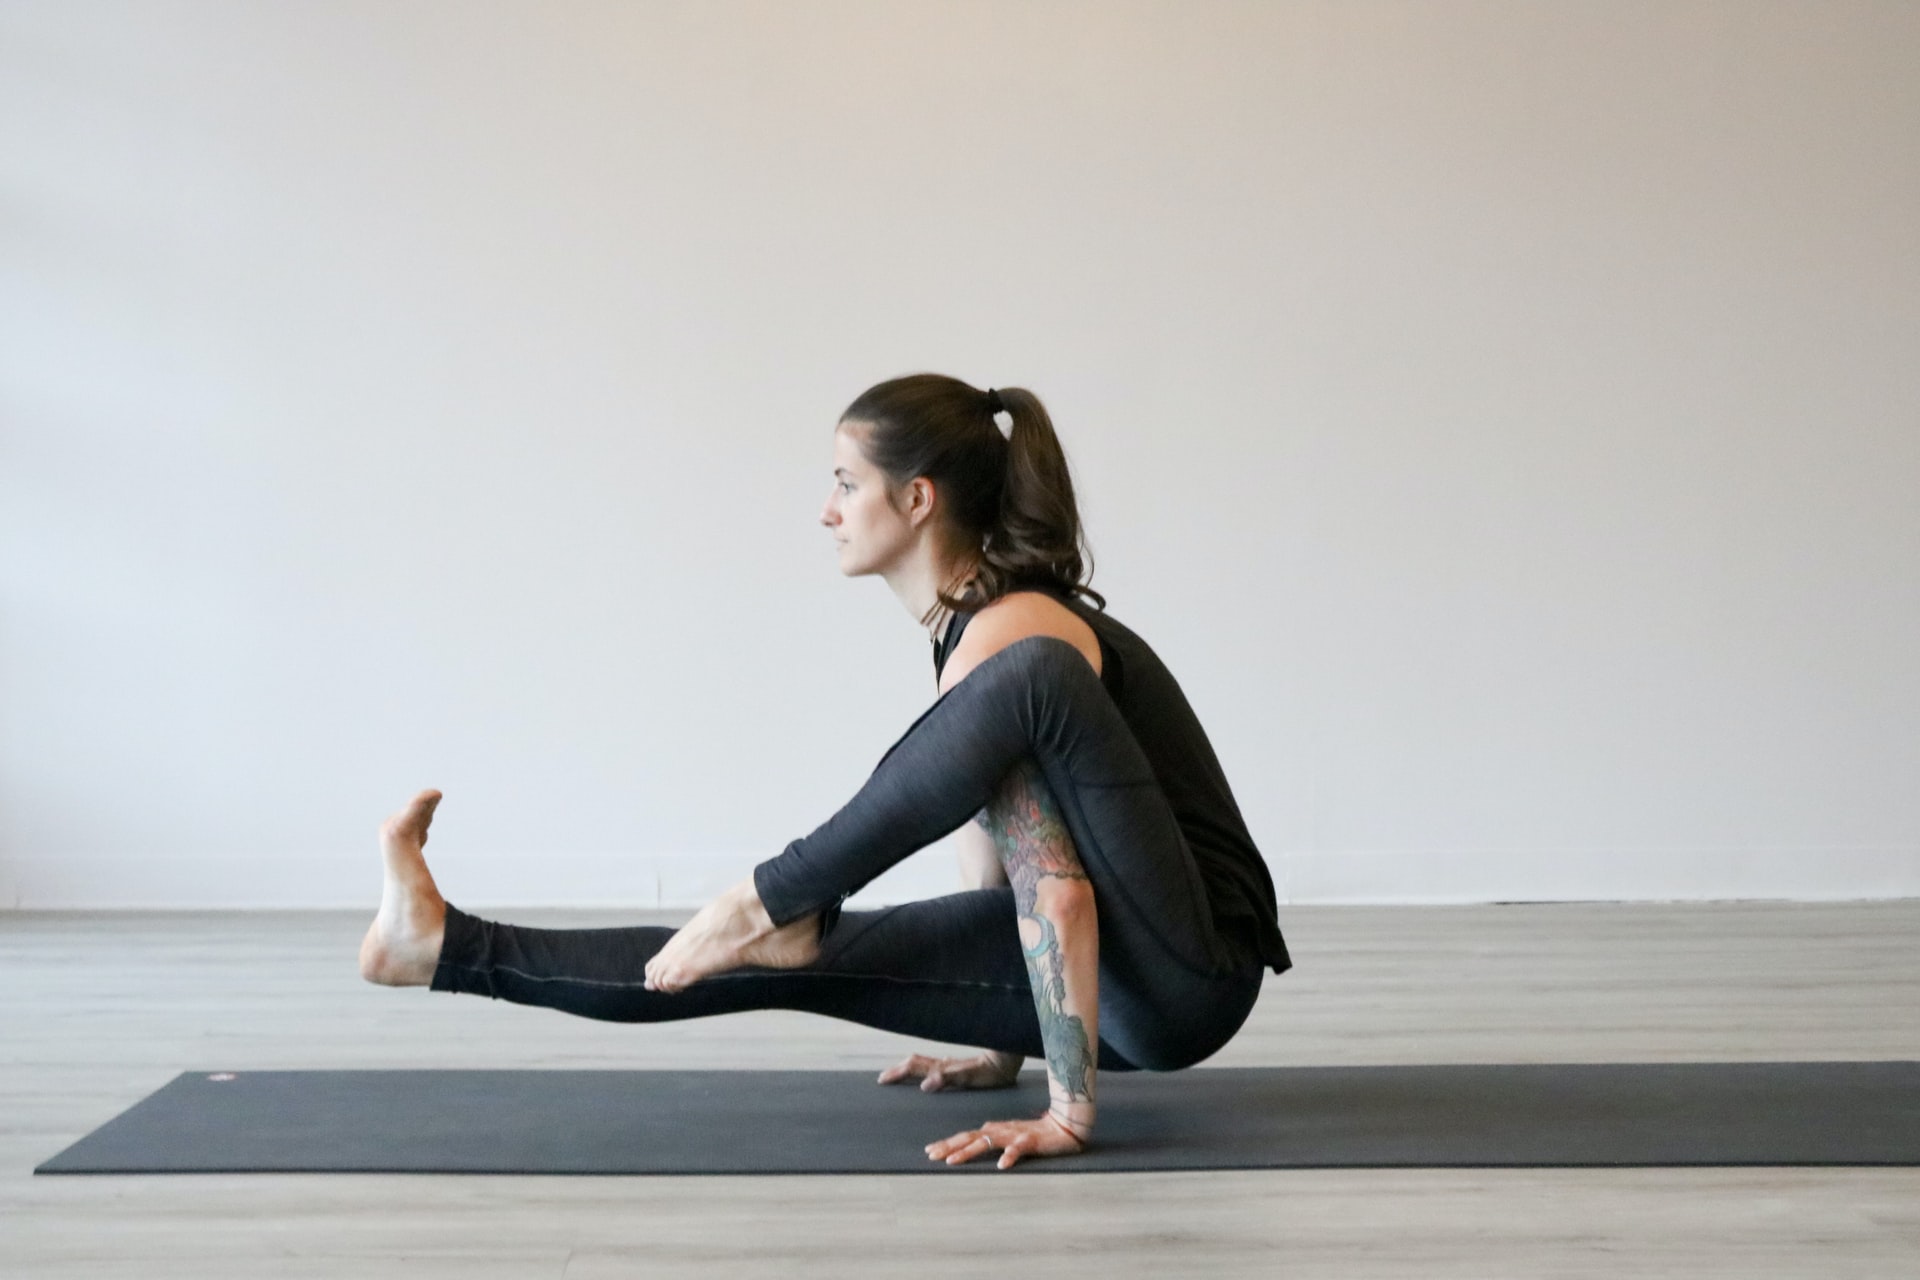 http://flowrece.com/wp-content/uploads/2021/06/por-que-hacer-yoga-empezar-principiantes-beneficios.jpg